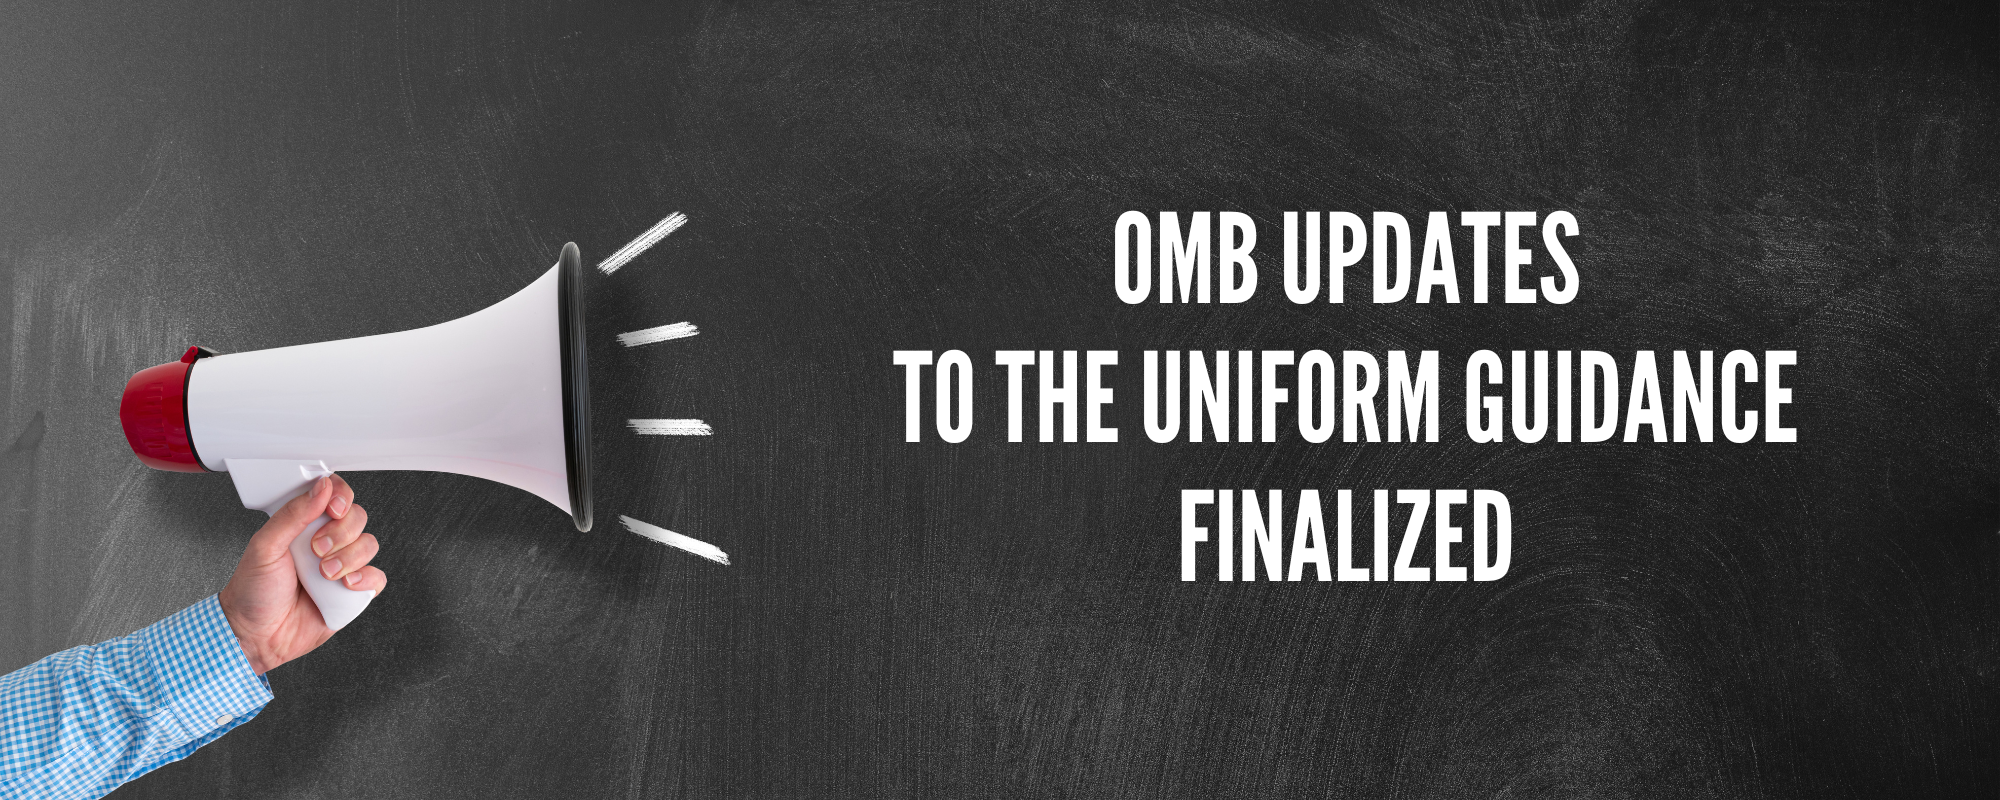 Uniform Guidance Updates Finalized